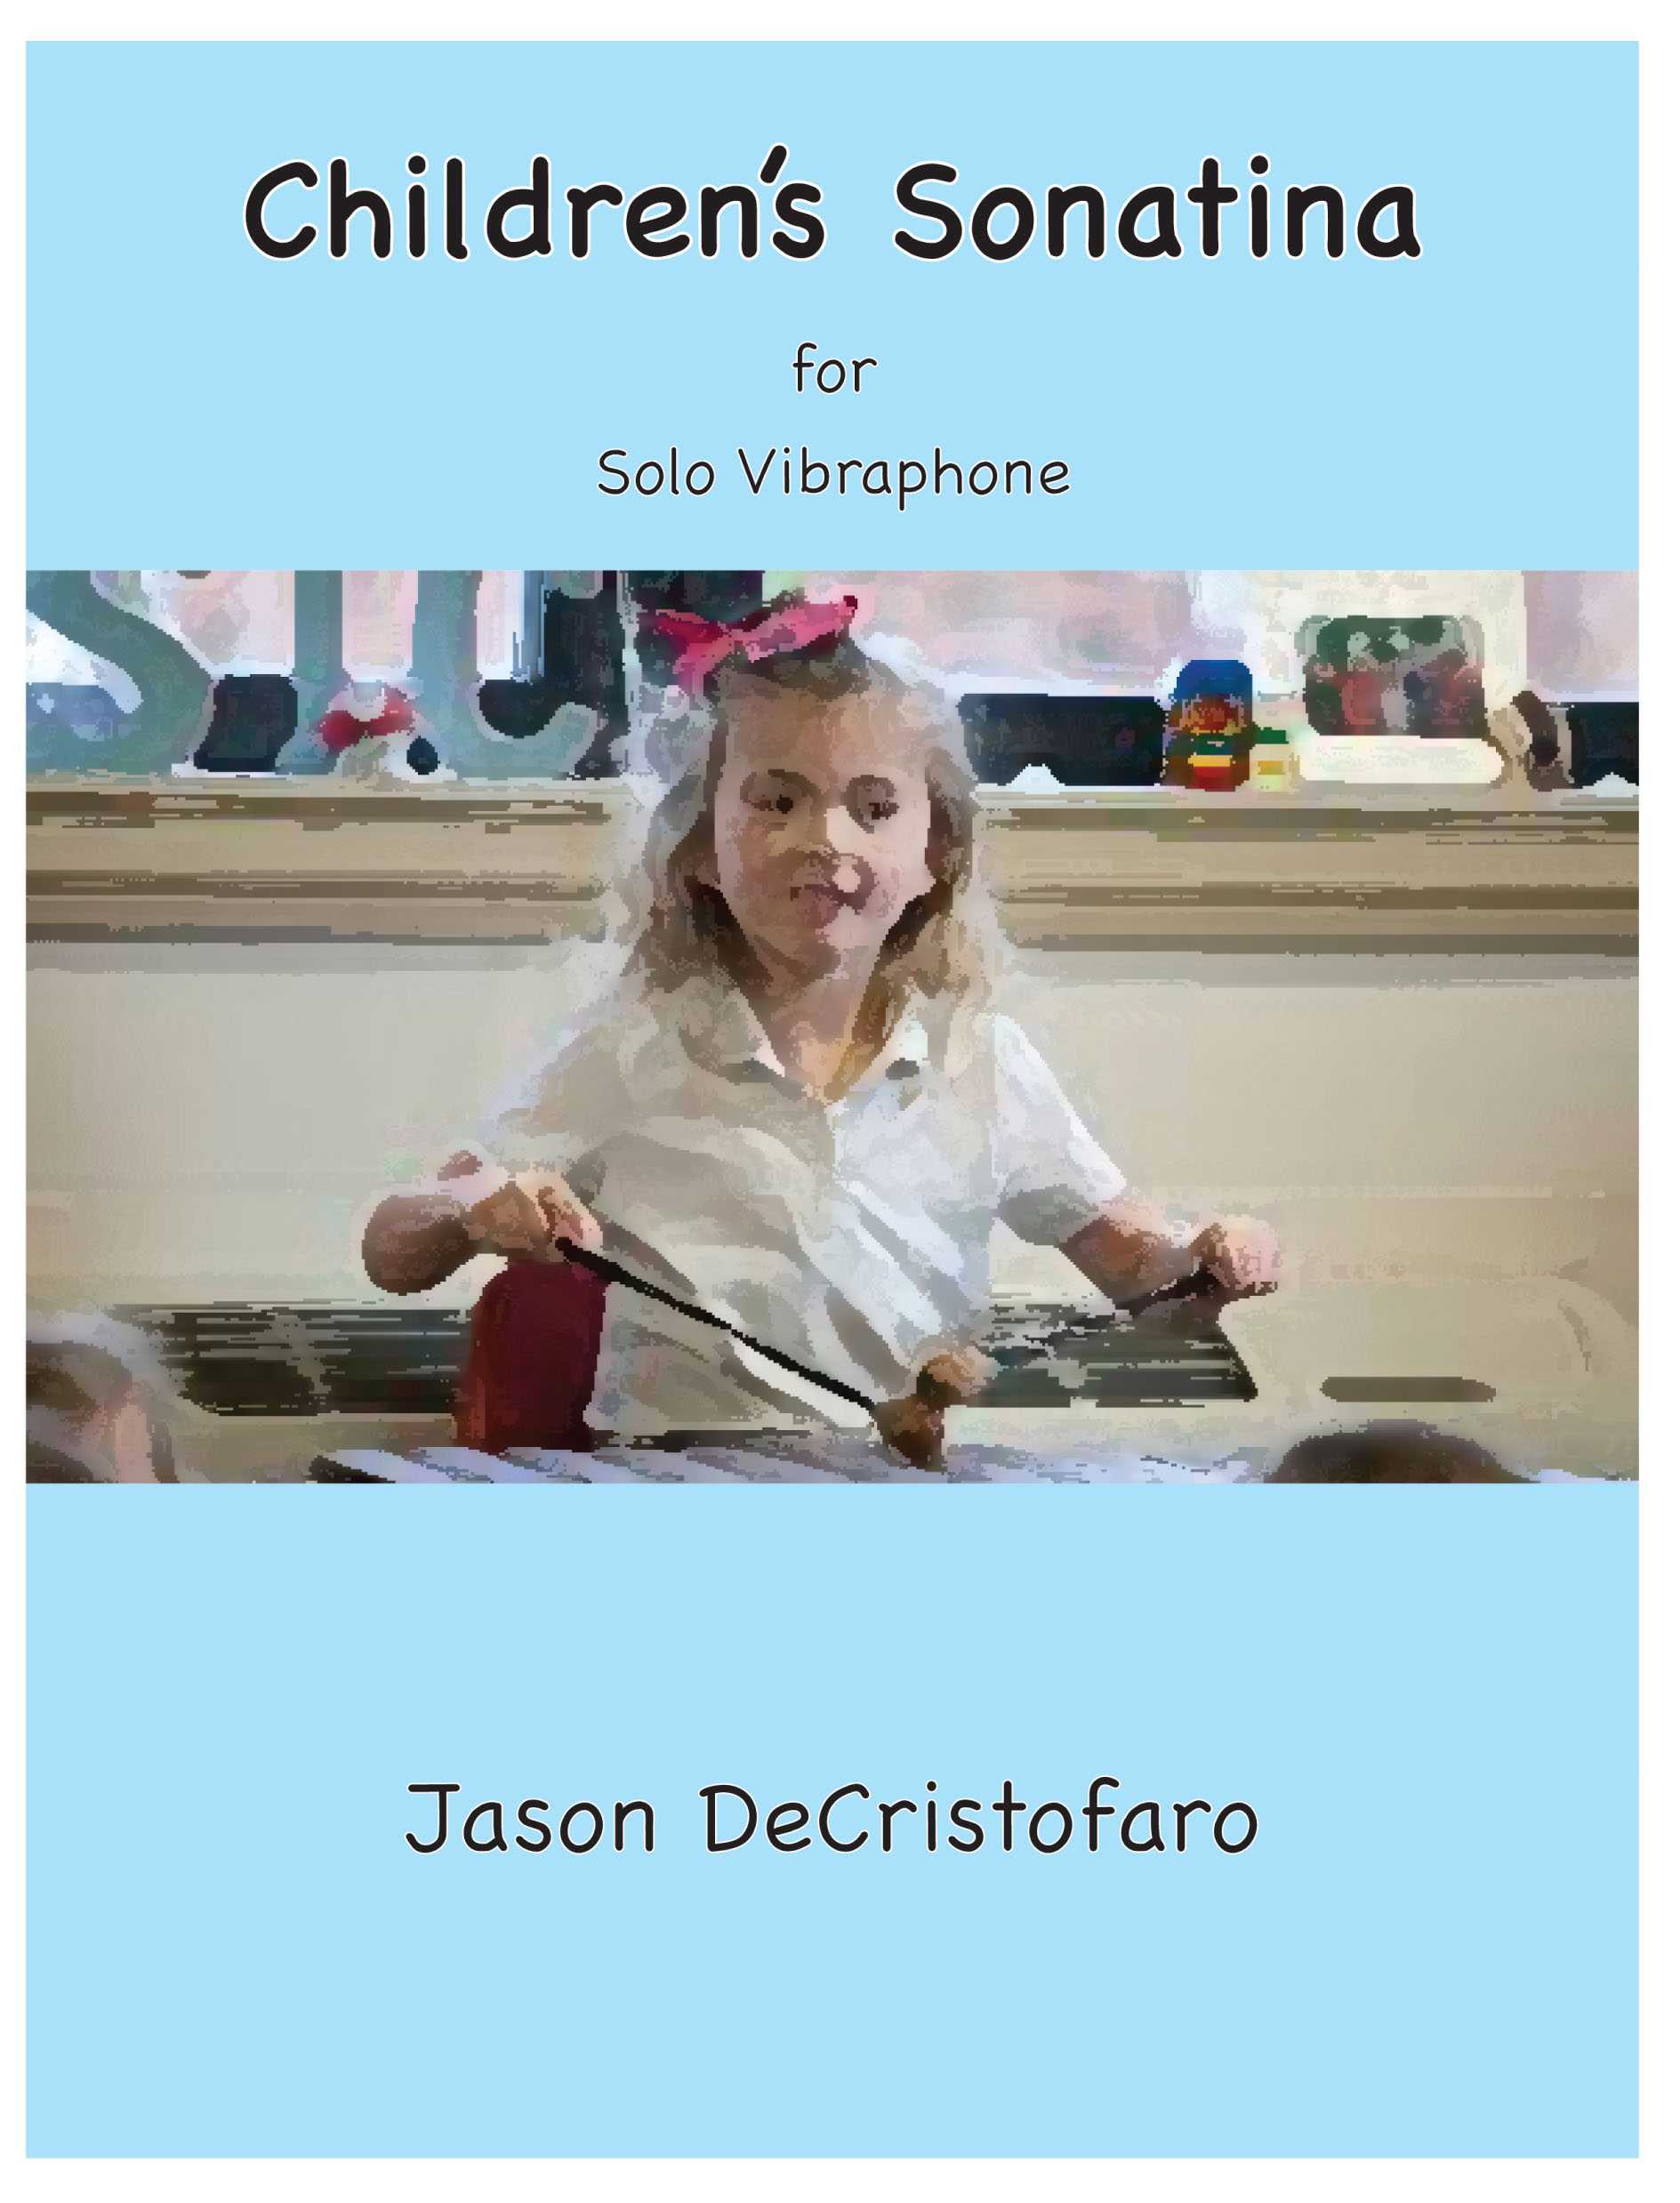 Children's Sonatina by Jason DeCristofaro